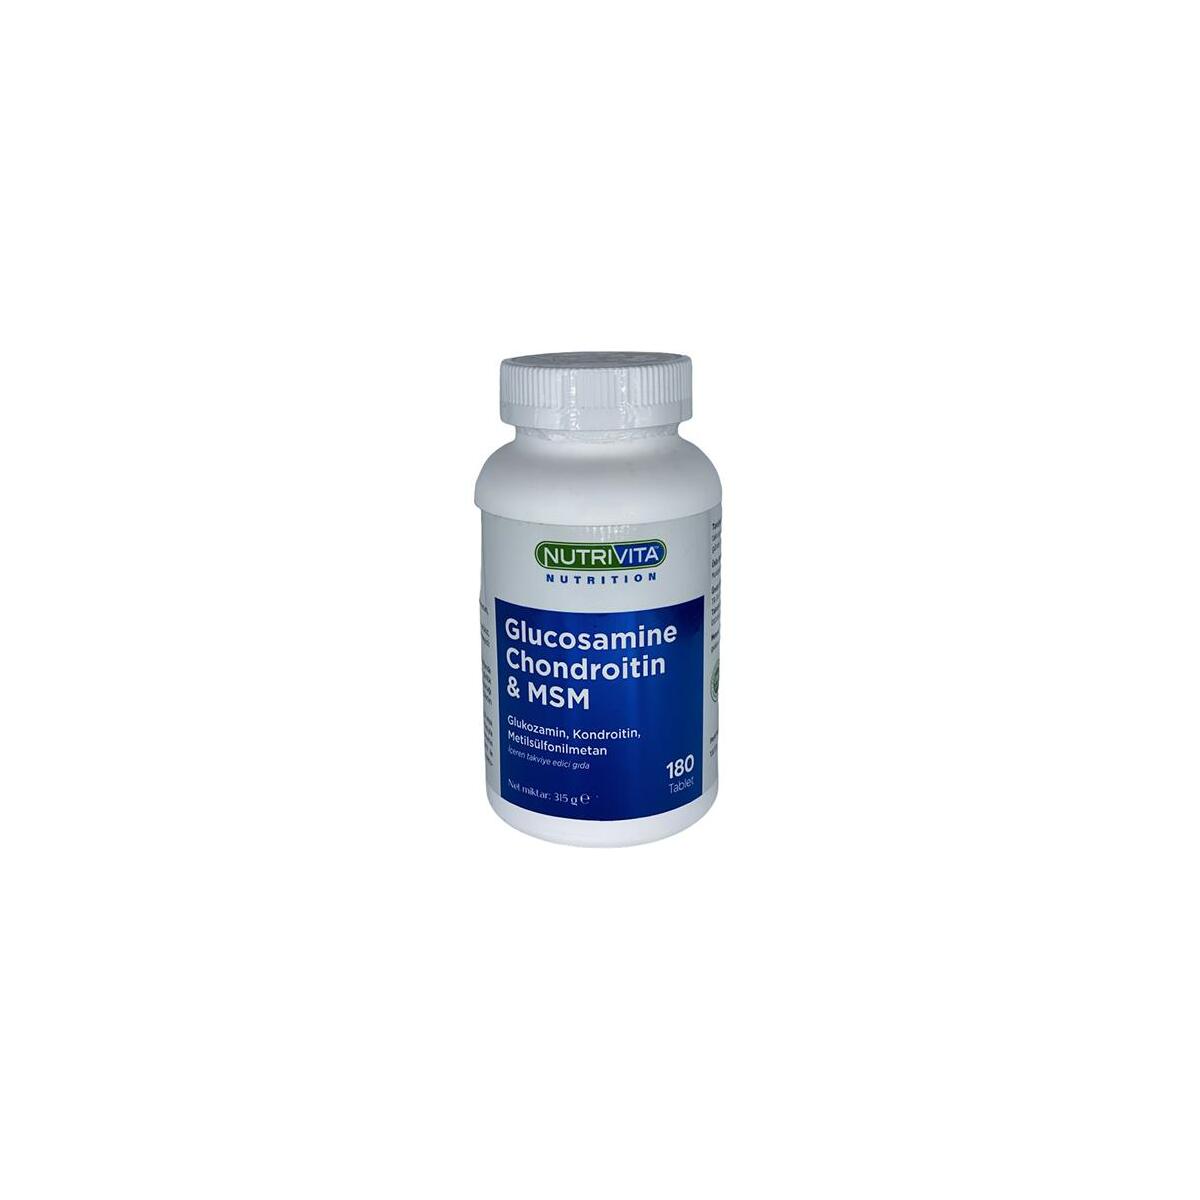 Nutrivita Nutrition Glucosamine Chondroitin Msm 180 Tablet Glukozamin Kondroitin